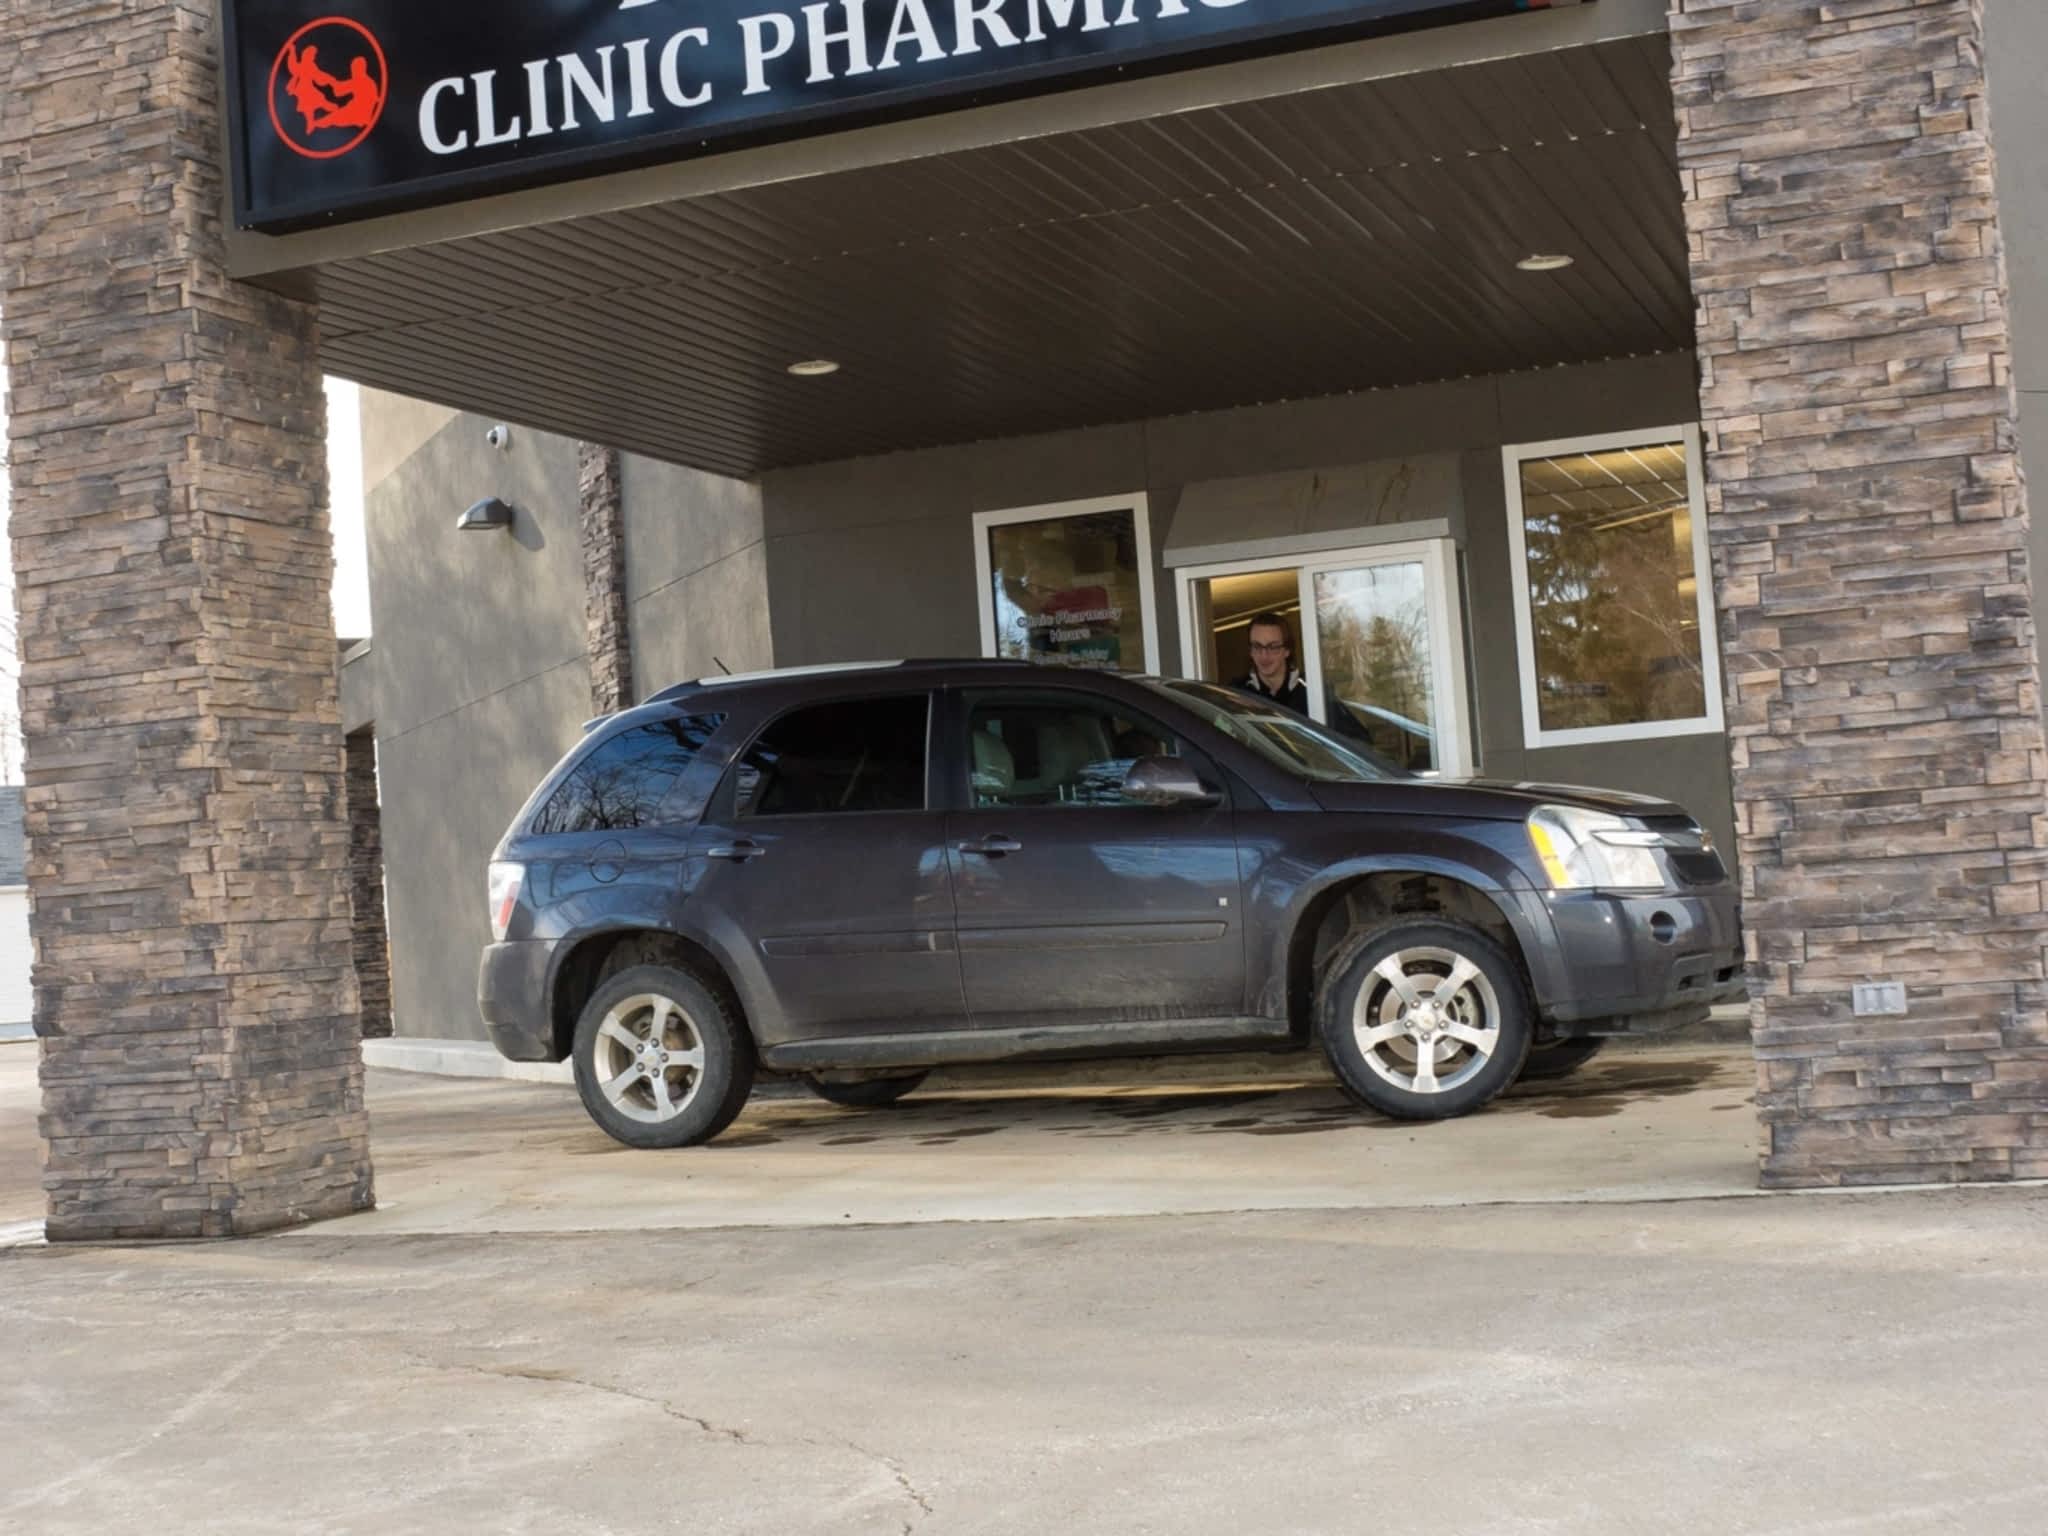 photo Dauphin Clinic Pharmacy Ltd